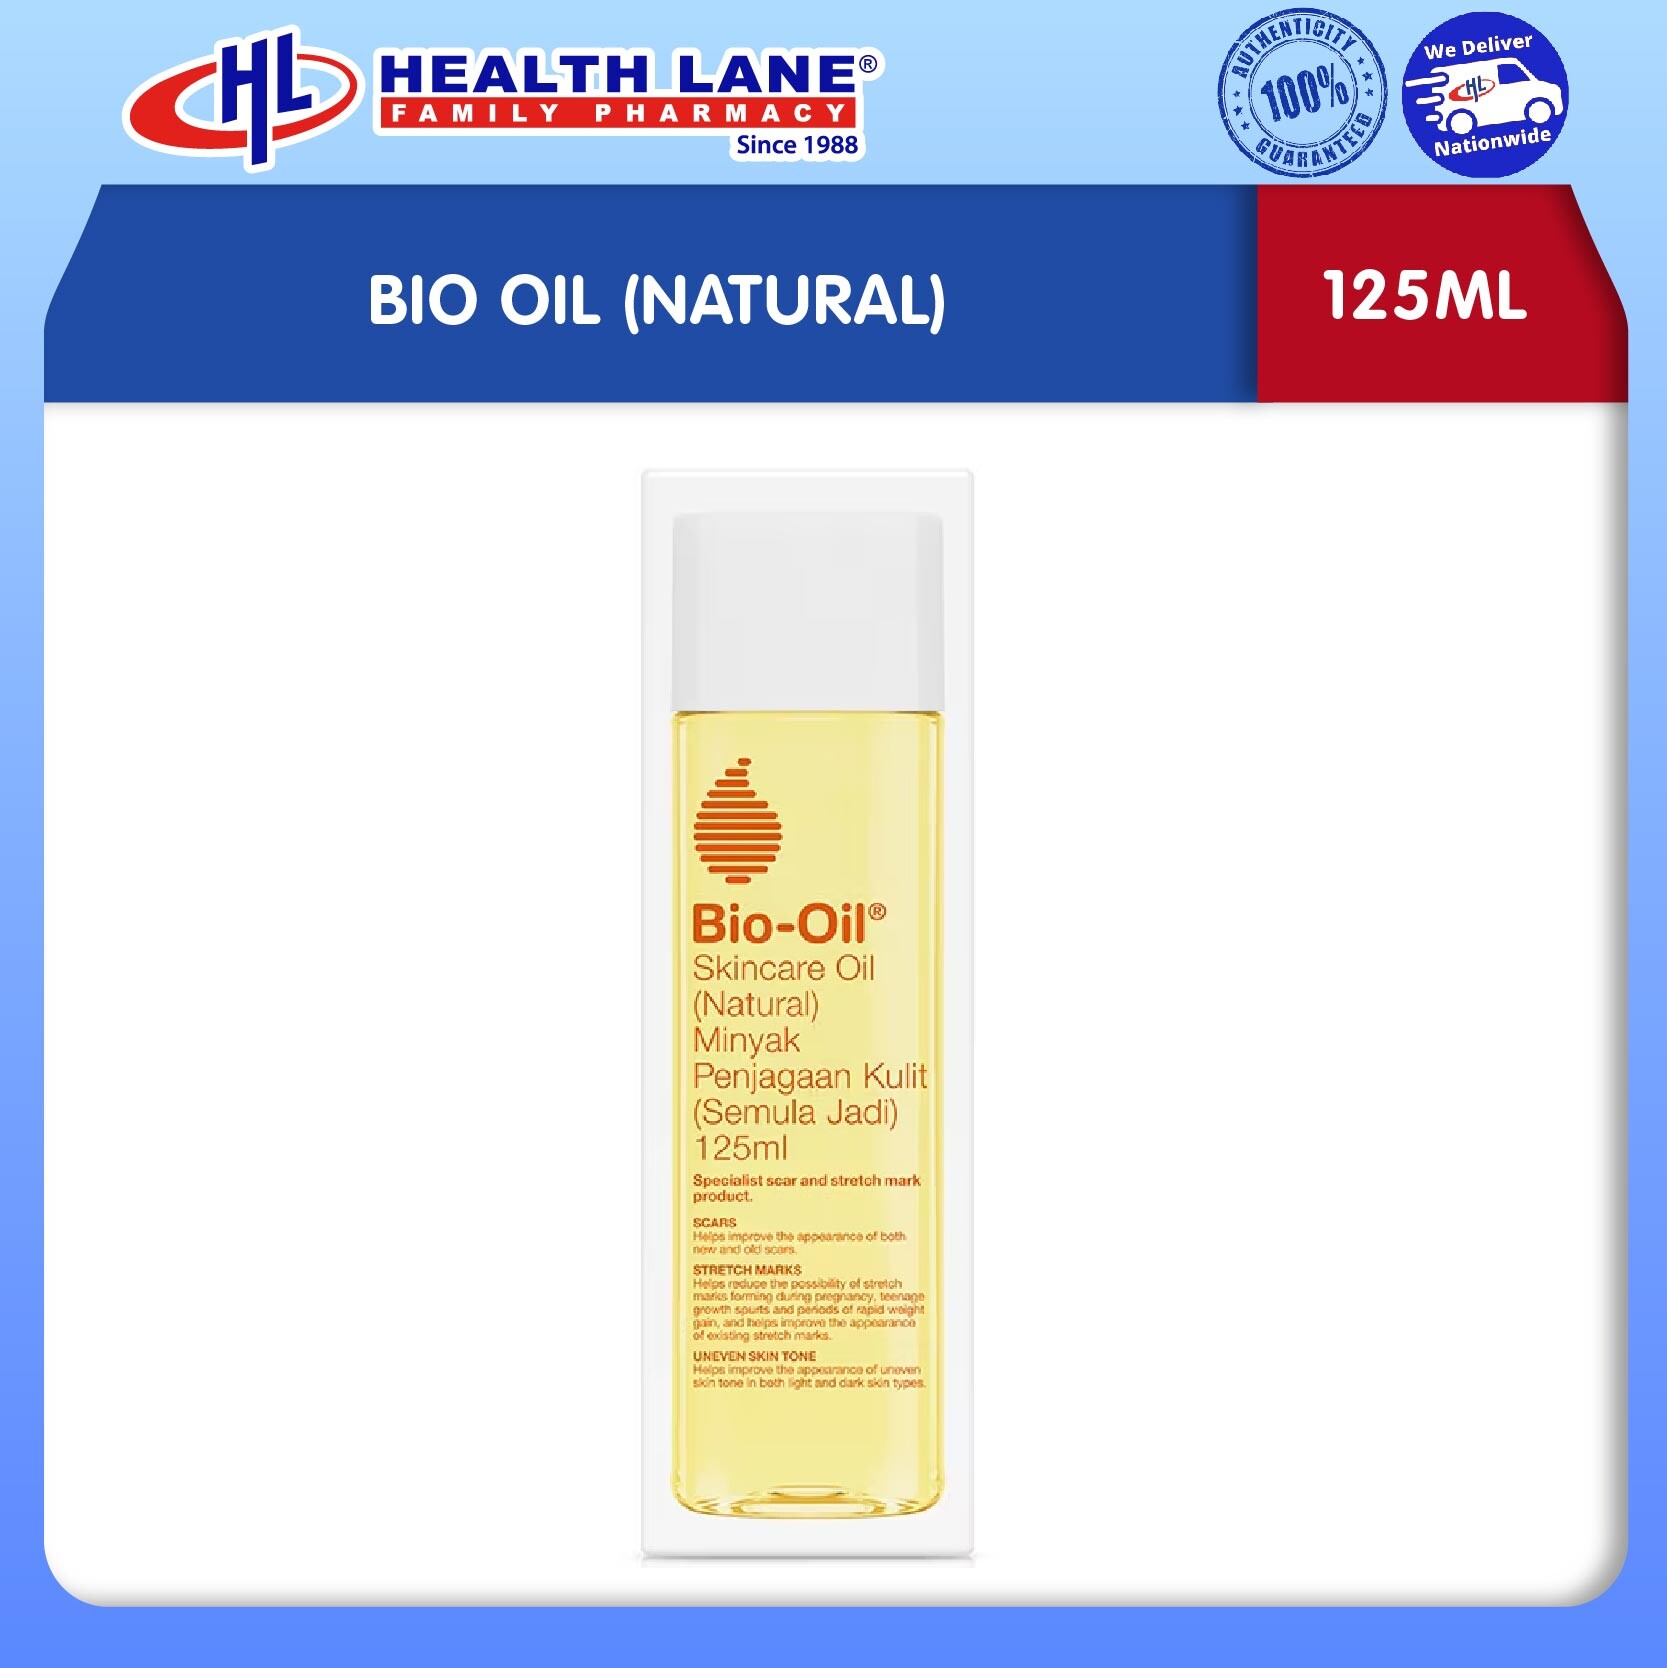 BIO OIL (NATURAL) (125ML)